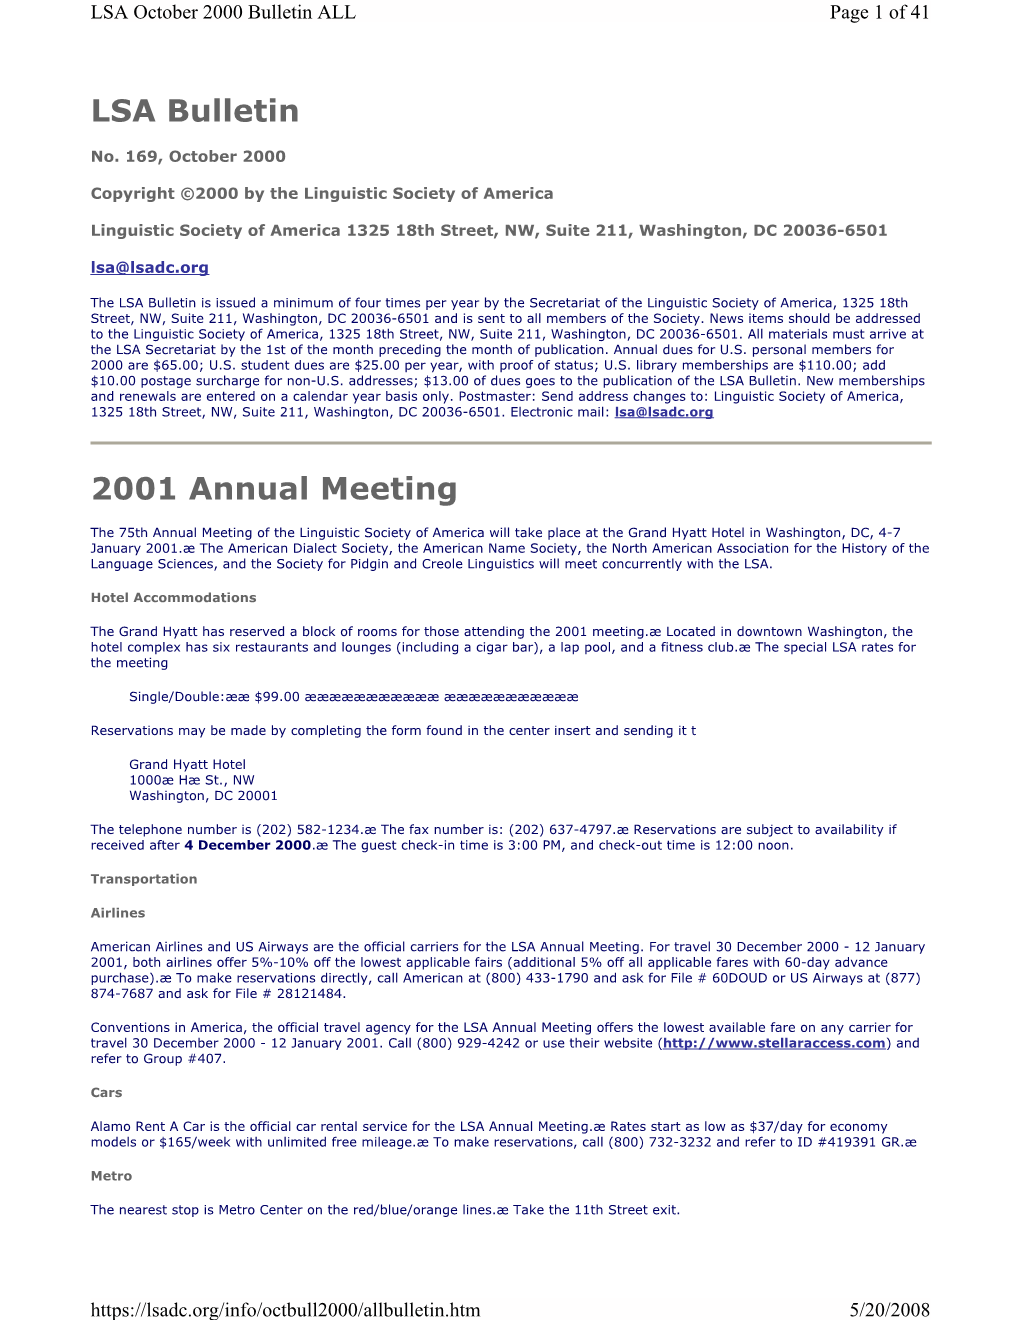 LSA Bulletin 2001 Annual Meeting